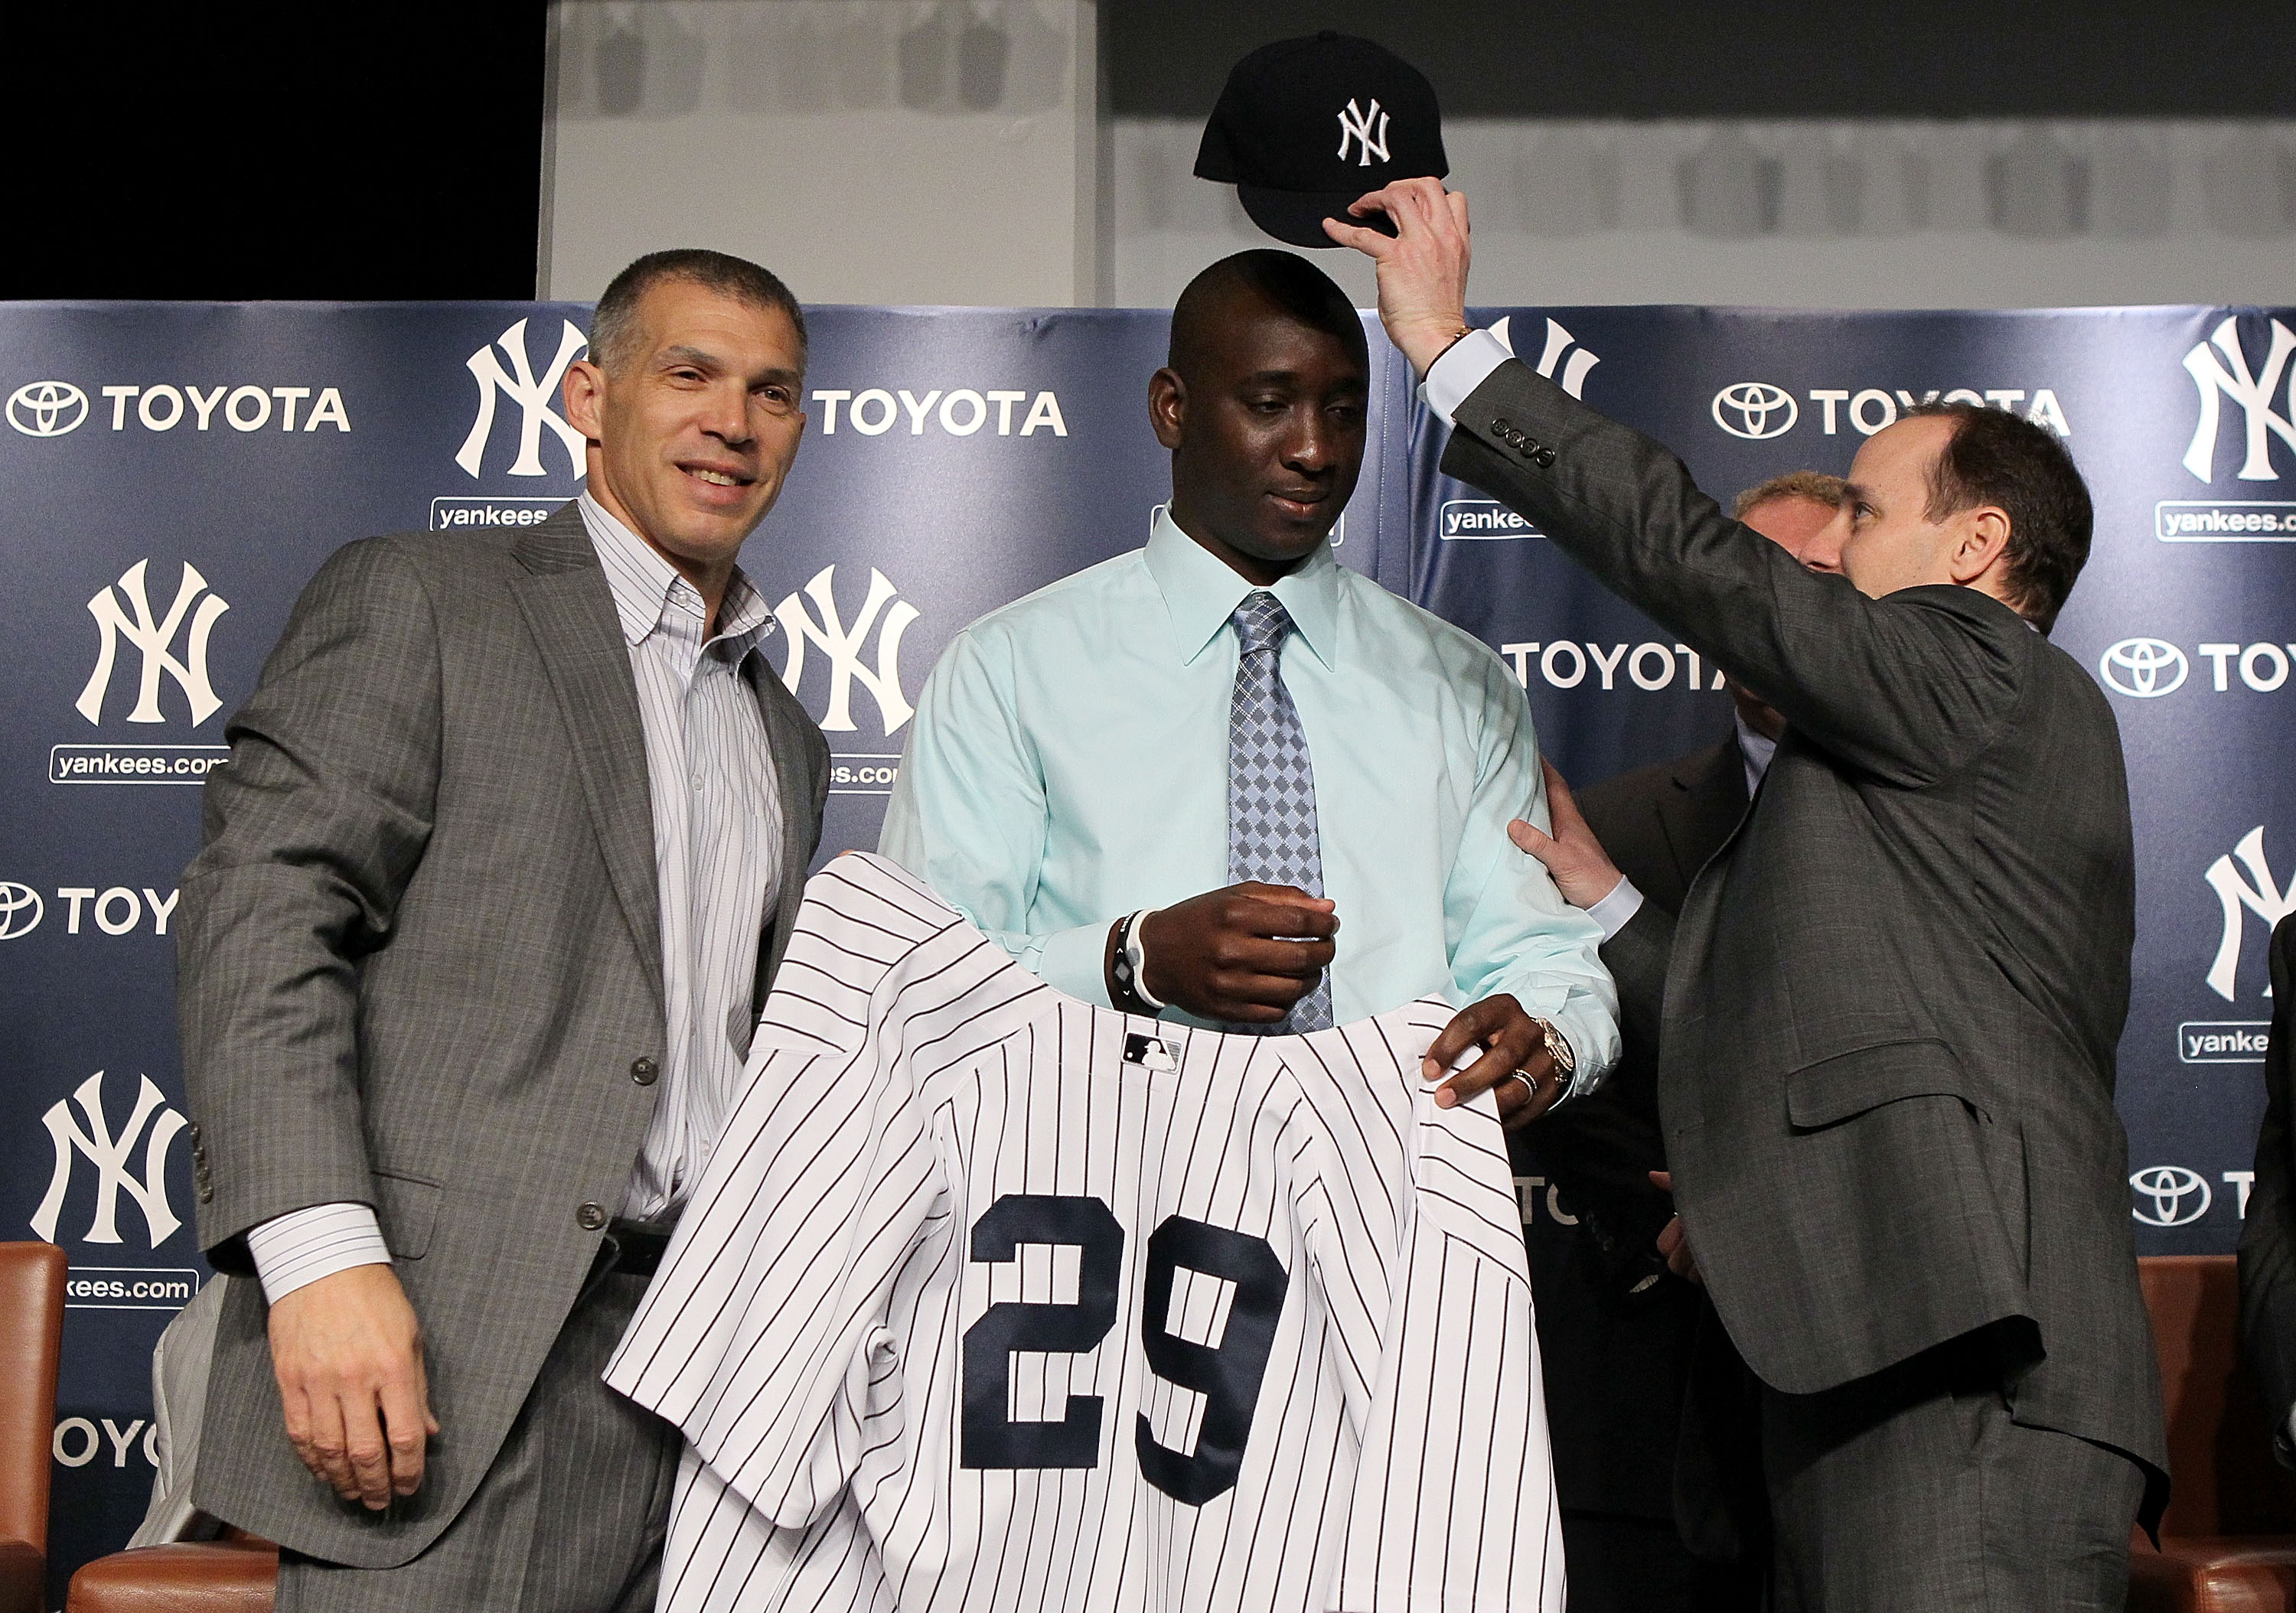 New York Yankees: How Rafael Soriano Has 'Untucked' Yankees